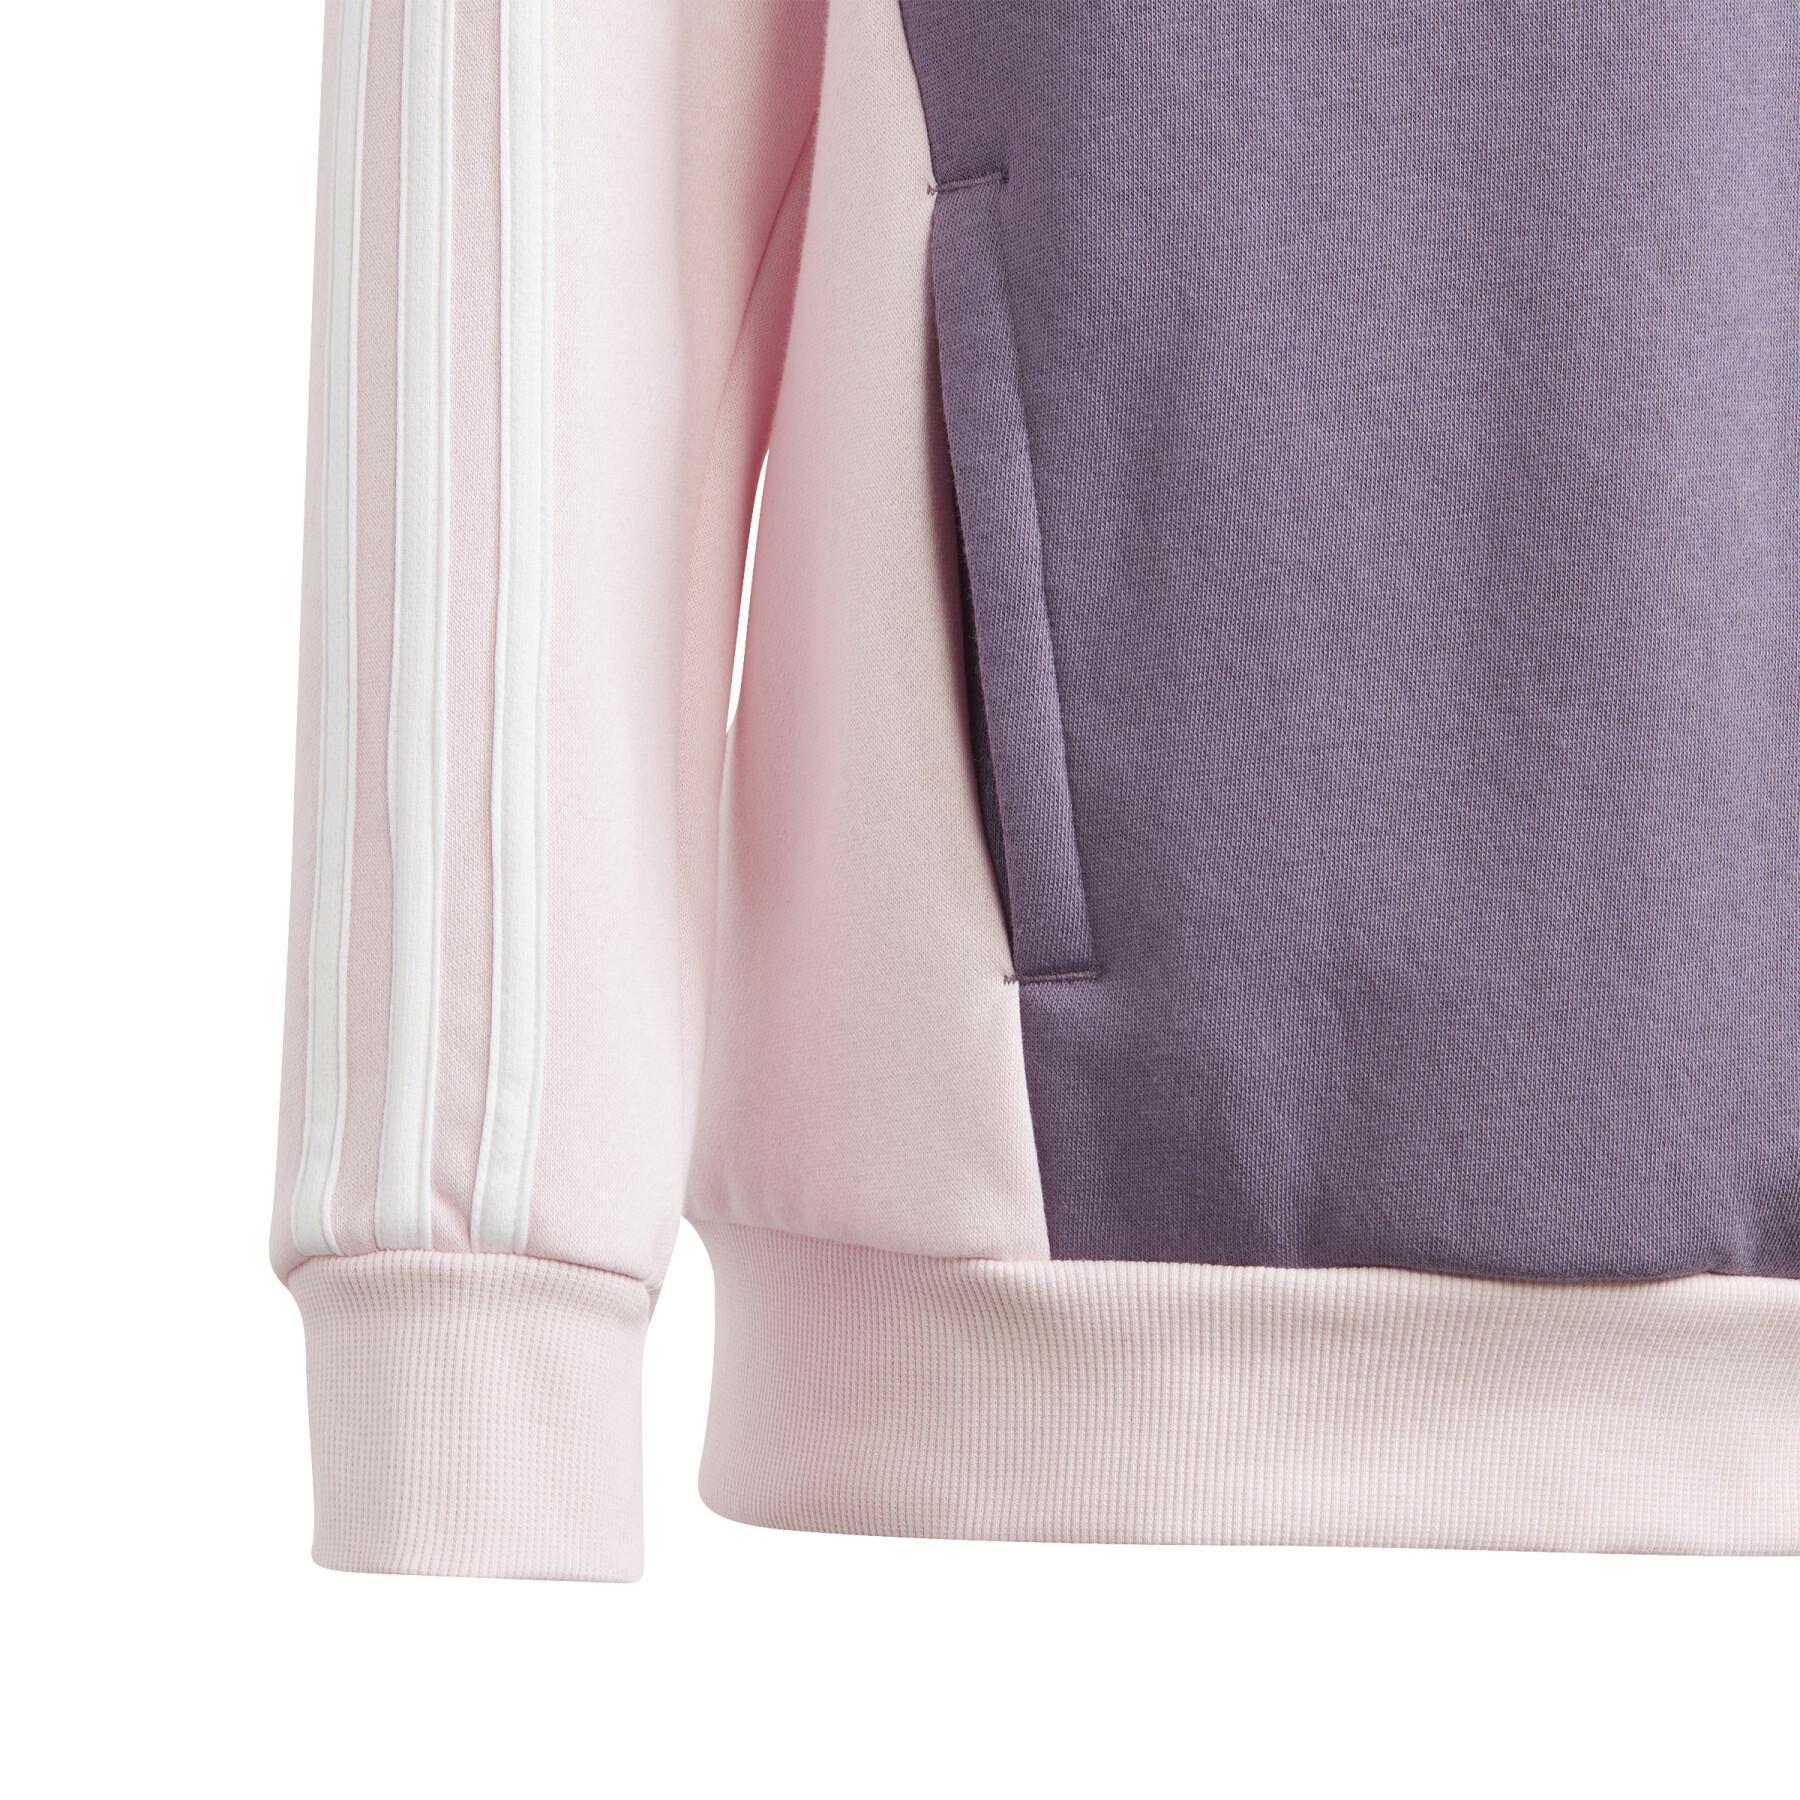 Children's hoodie adidas Tiberio 3-Stripes Colorblock - Sweatshirts -  Children's clothing - Lifestyle